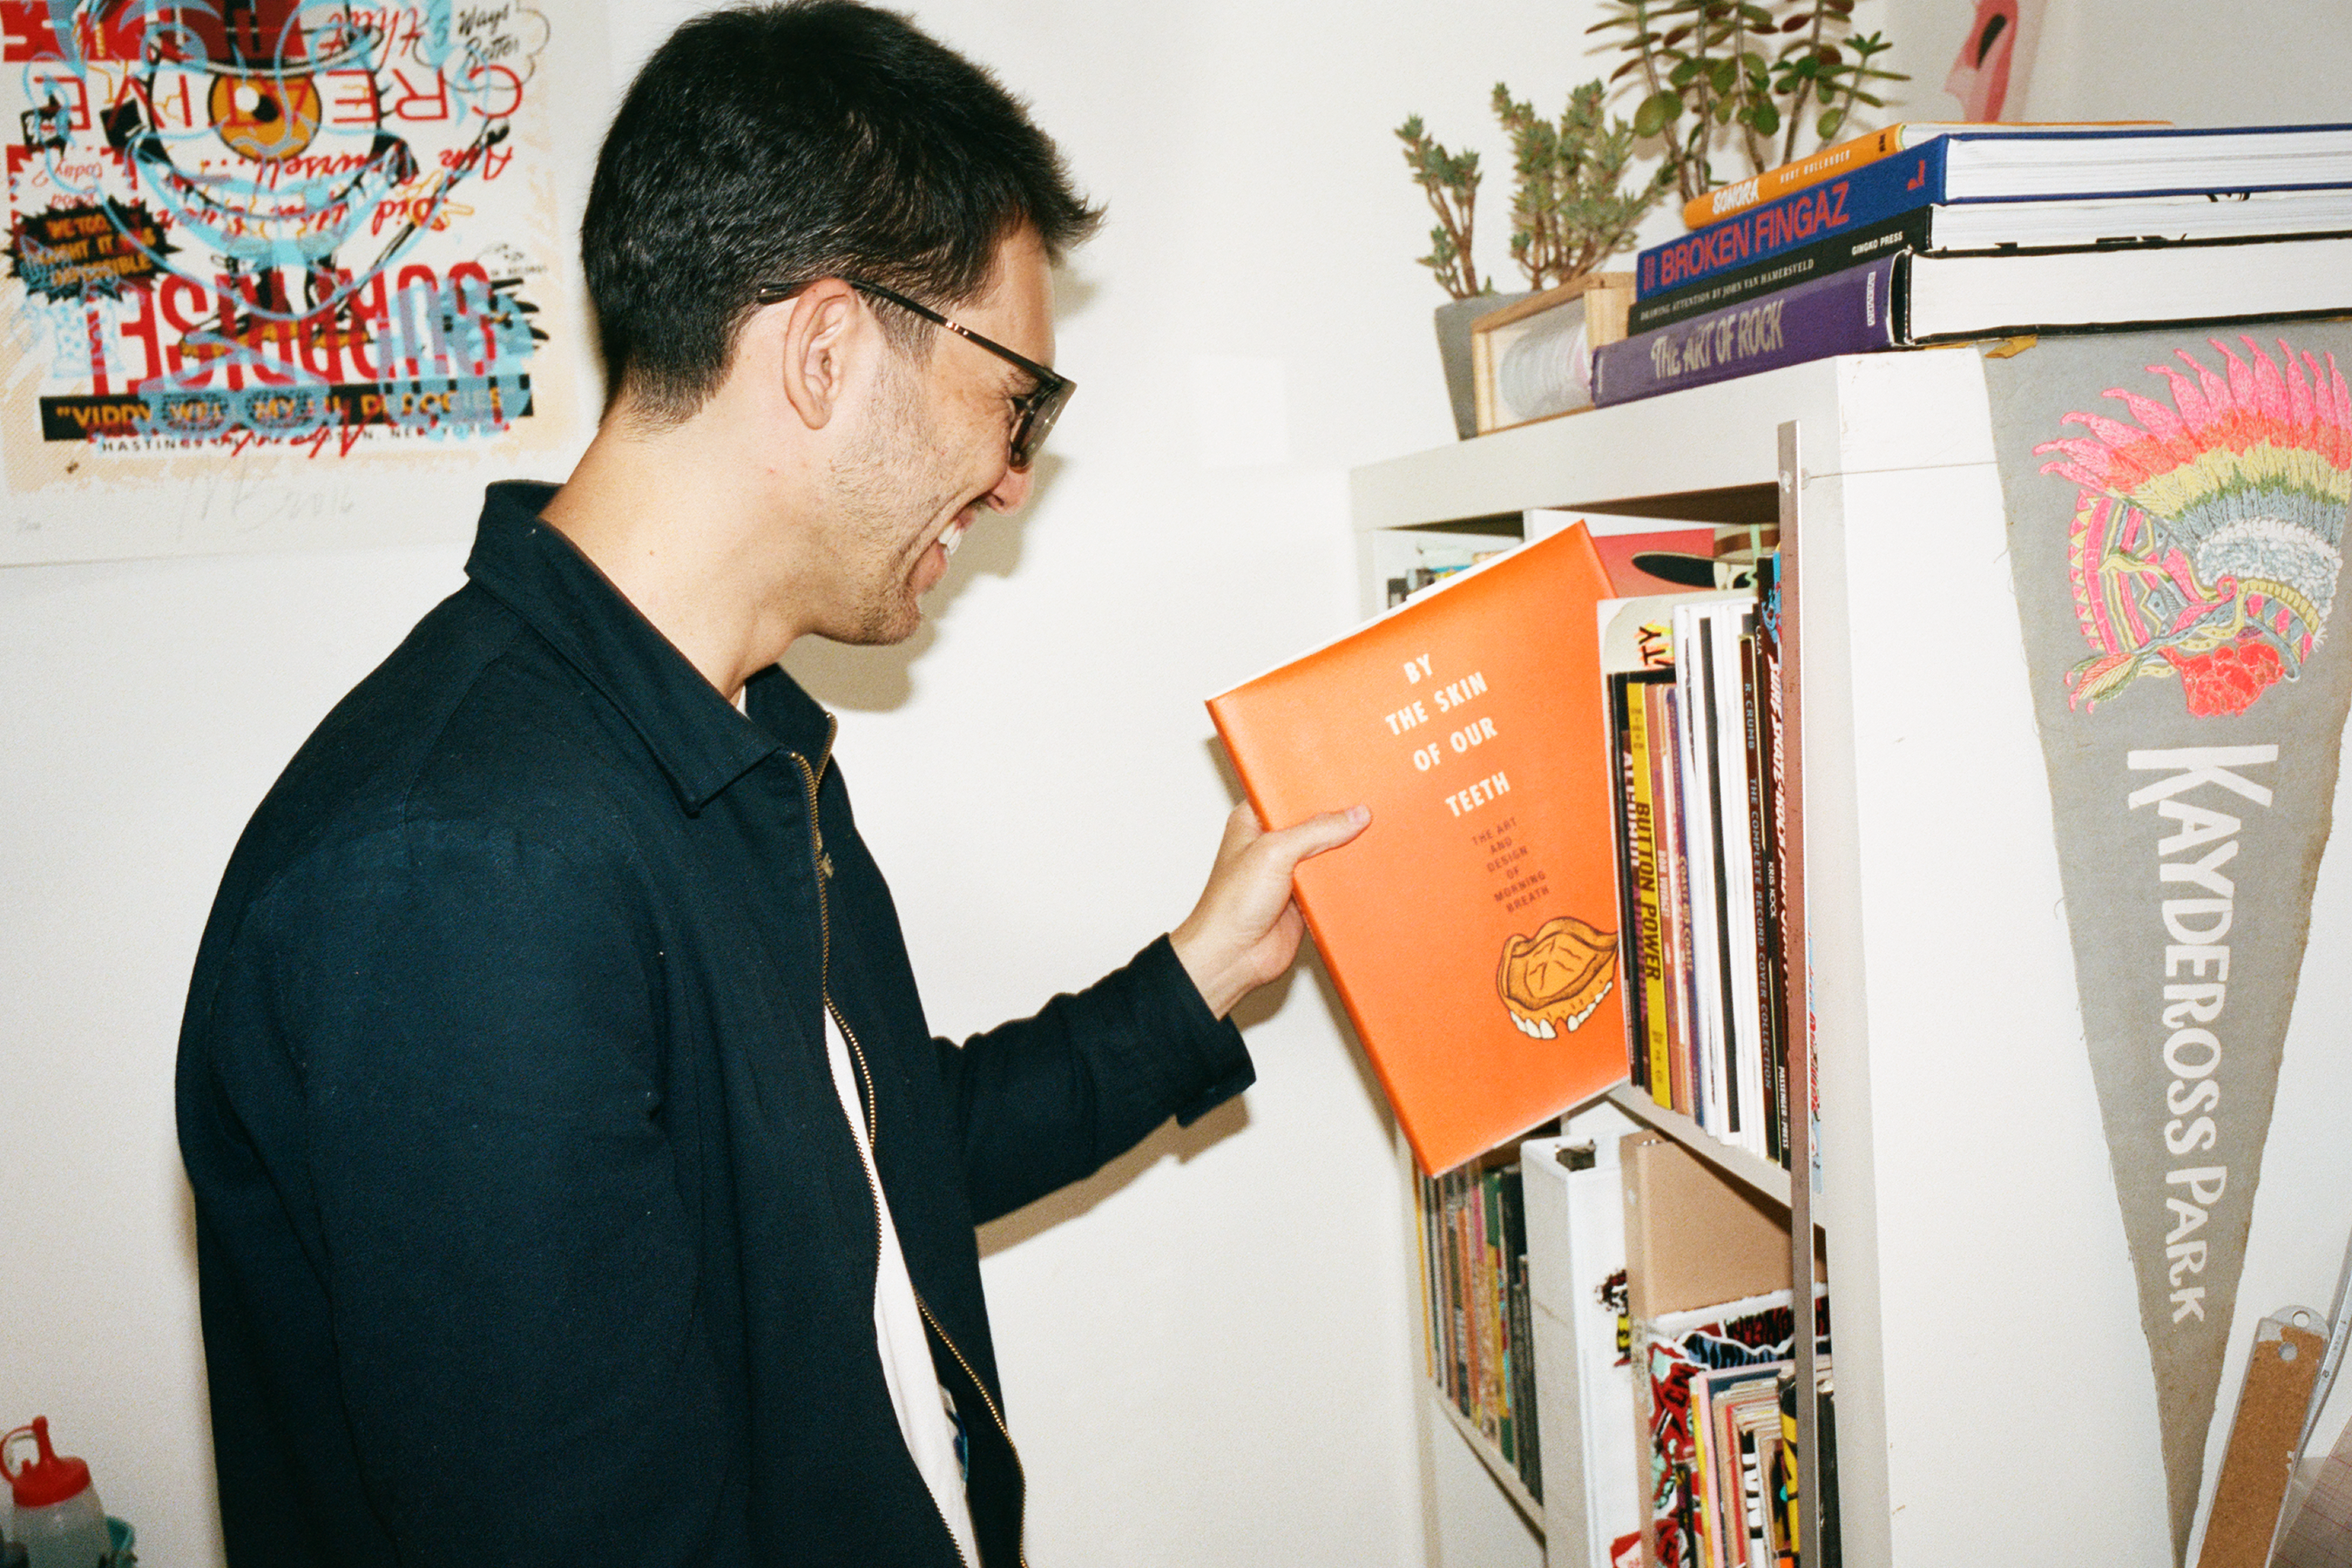 Daniel Shepard reaching for a book on his bookshelf